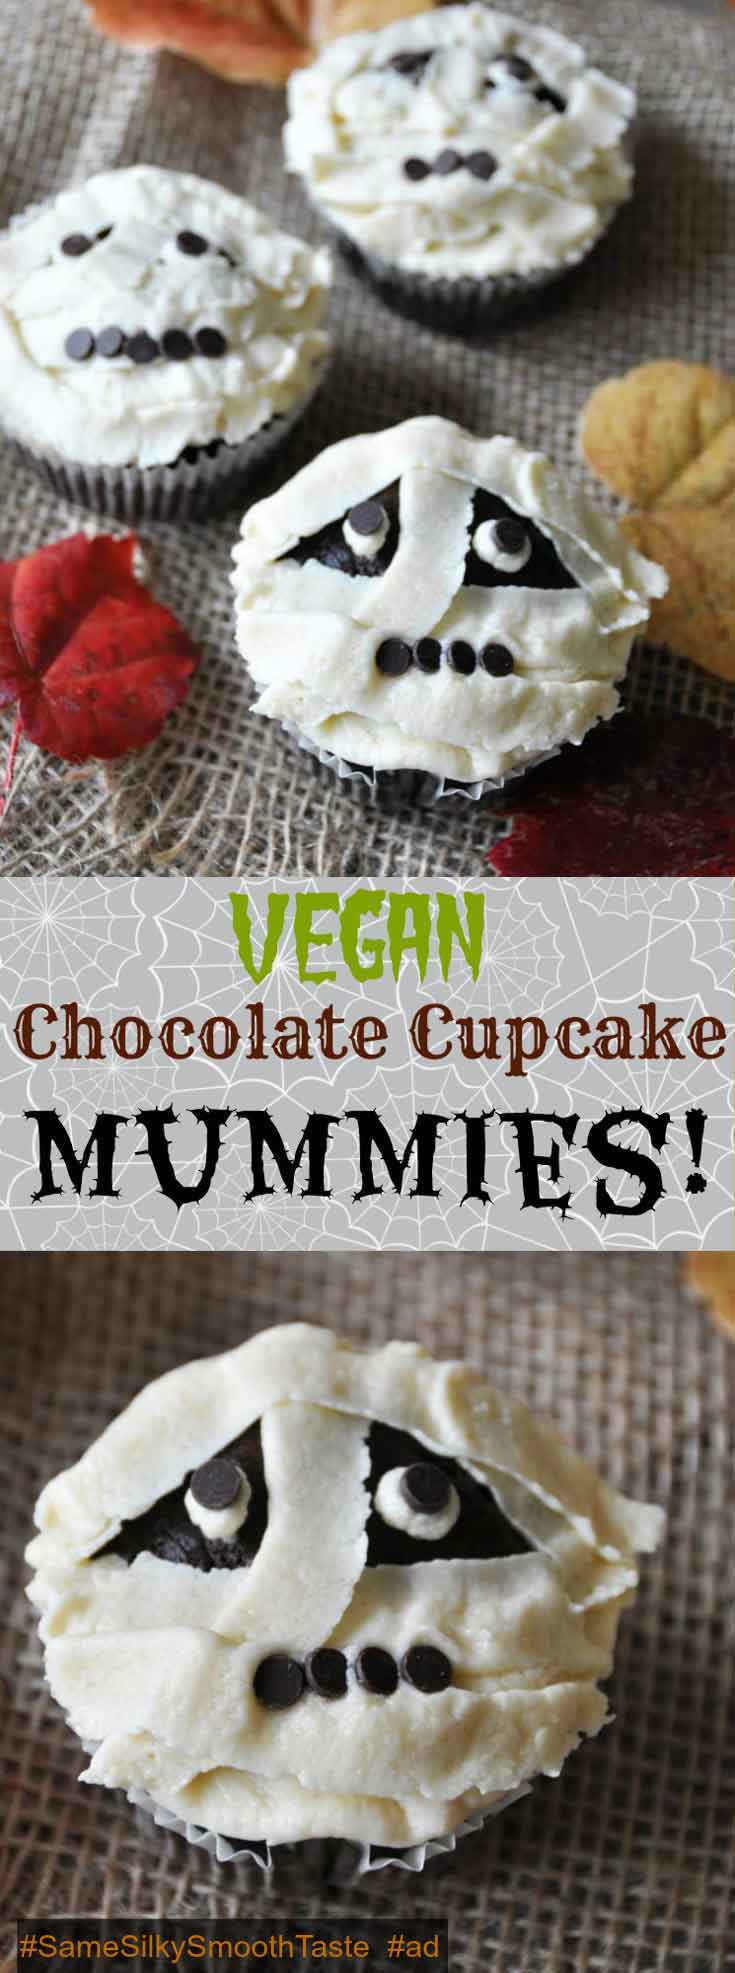 Vegan chocolate cupcakes with vanilla buttercream frosting, decorated like mummies! A perfect Halloween dessert recipe! @Silk @Walmart #SameSilkySmoothTaste #ad www.veganosity.com